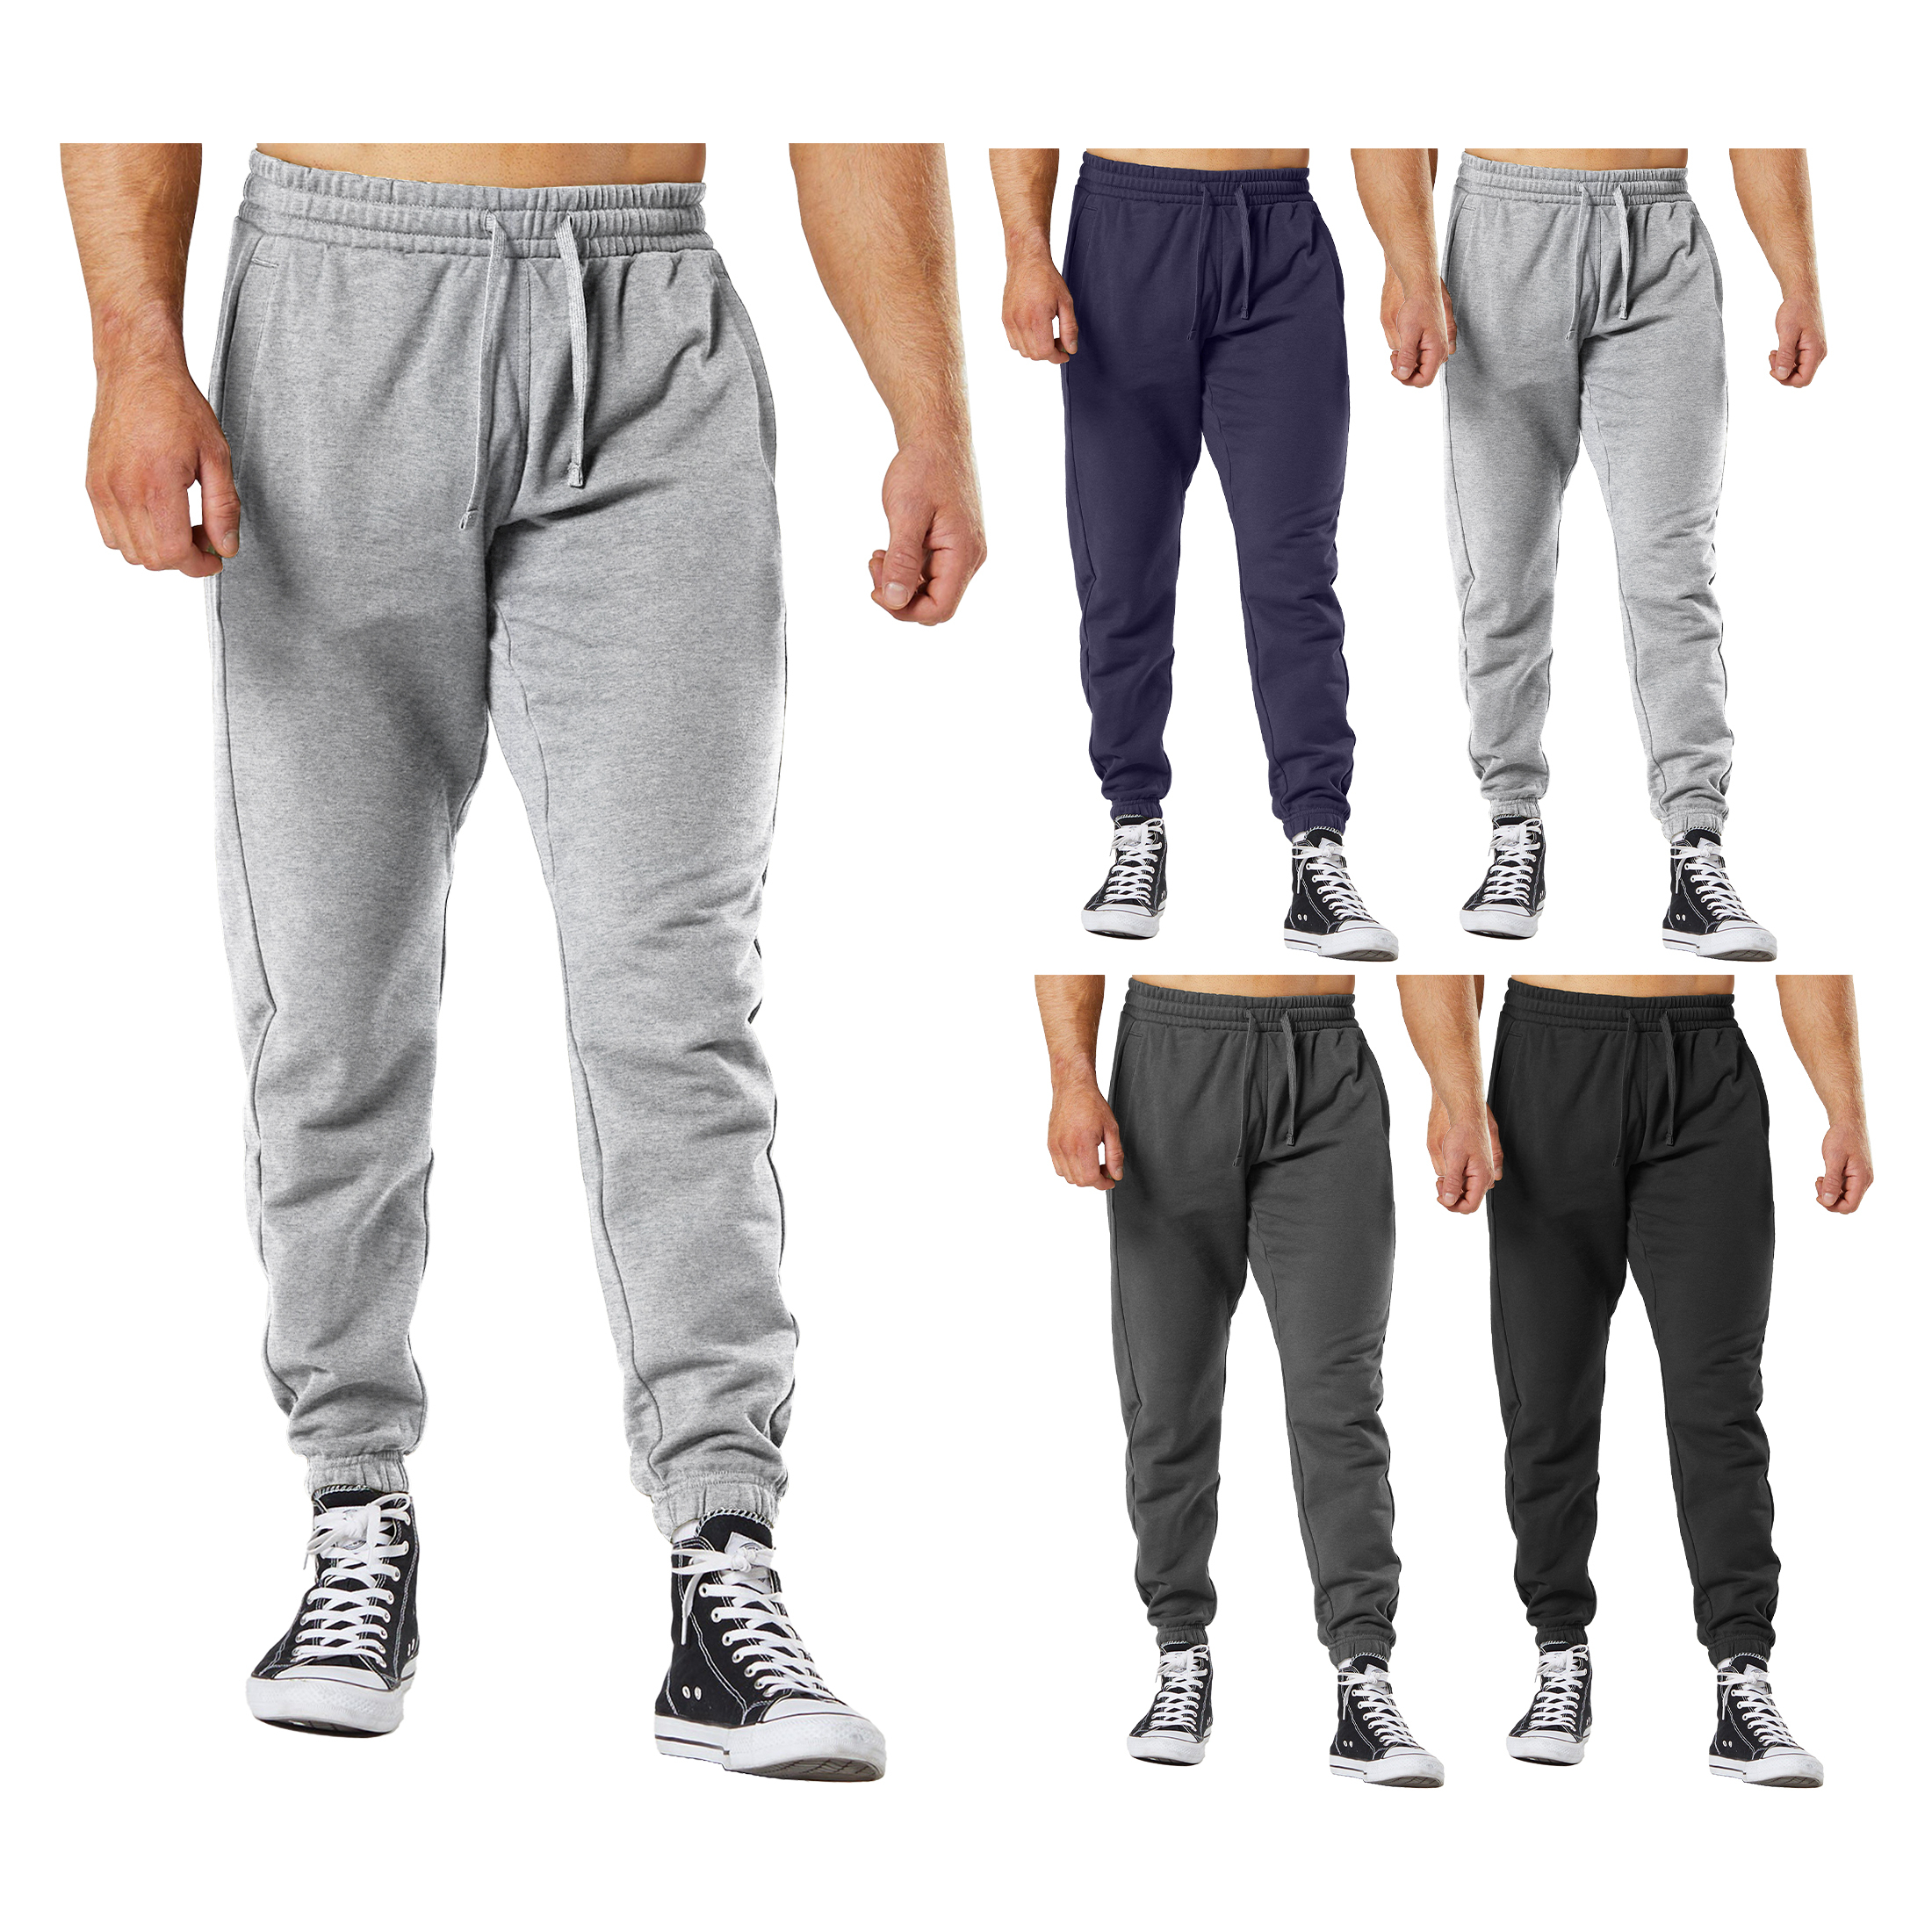 3-Pack: Men's Casual Fleece-Lined Elastic Bottom Jogger Pants With Pockets - Medium